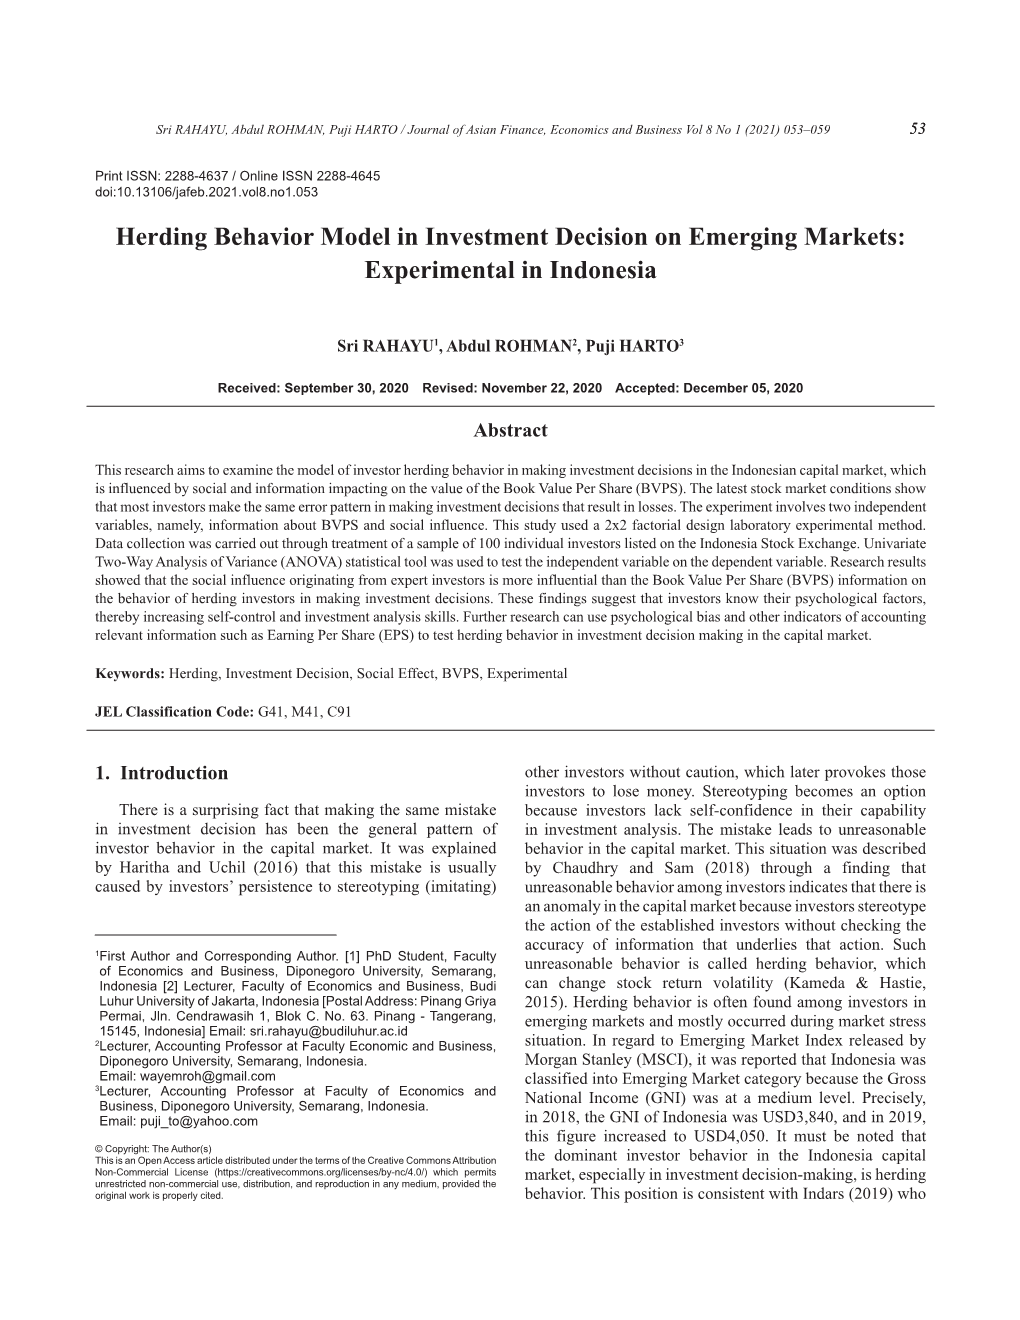 Herding Behavior Model in Investment Decision on Emerging Markets: Experimental in Indonesia